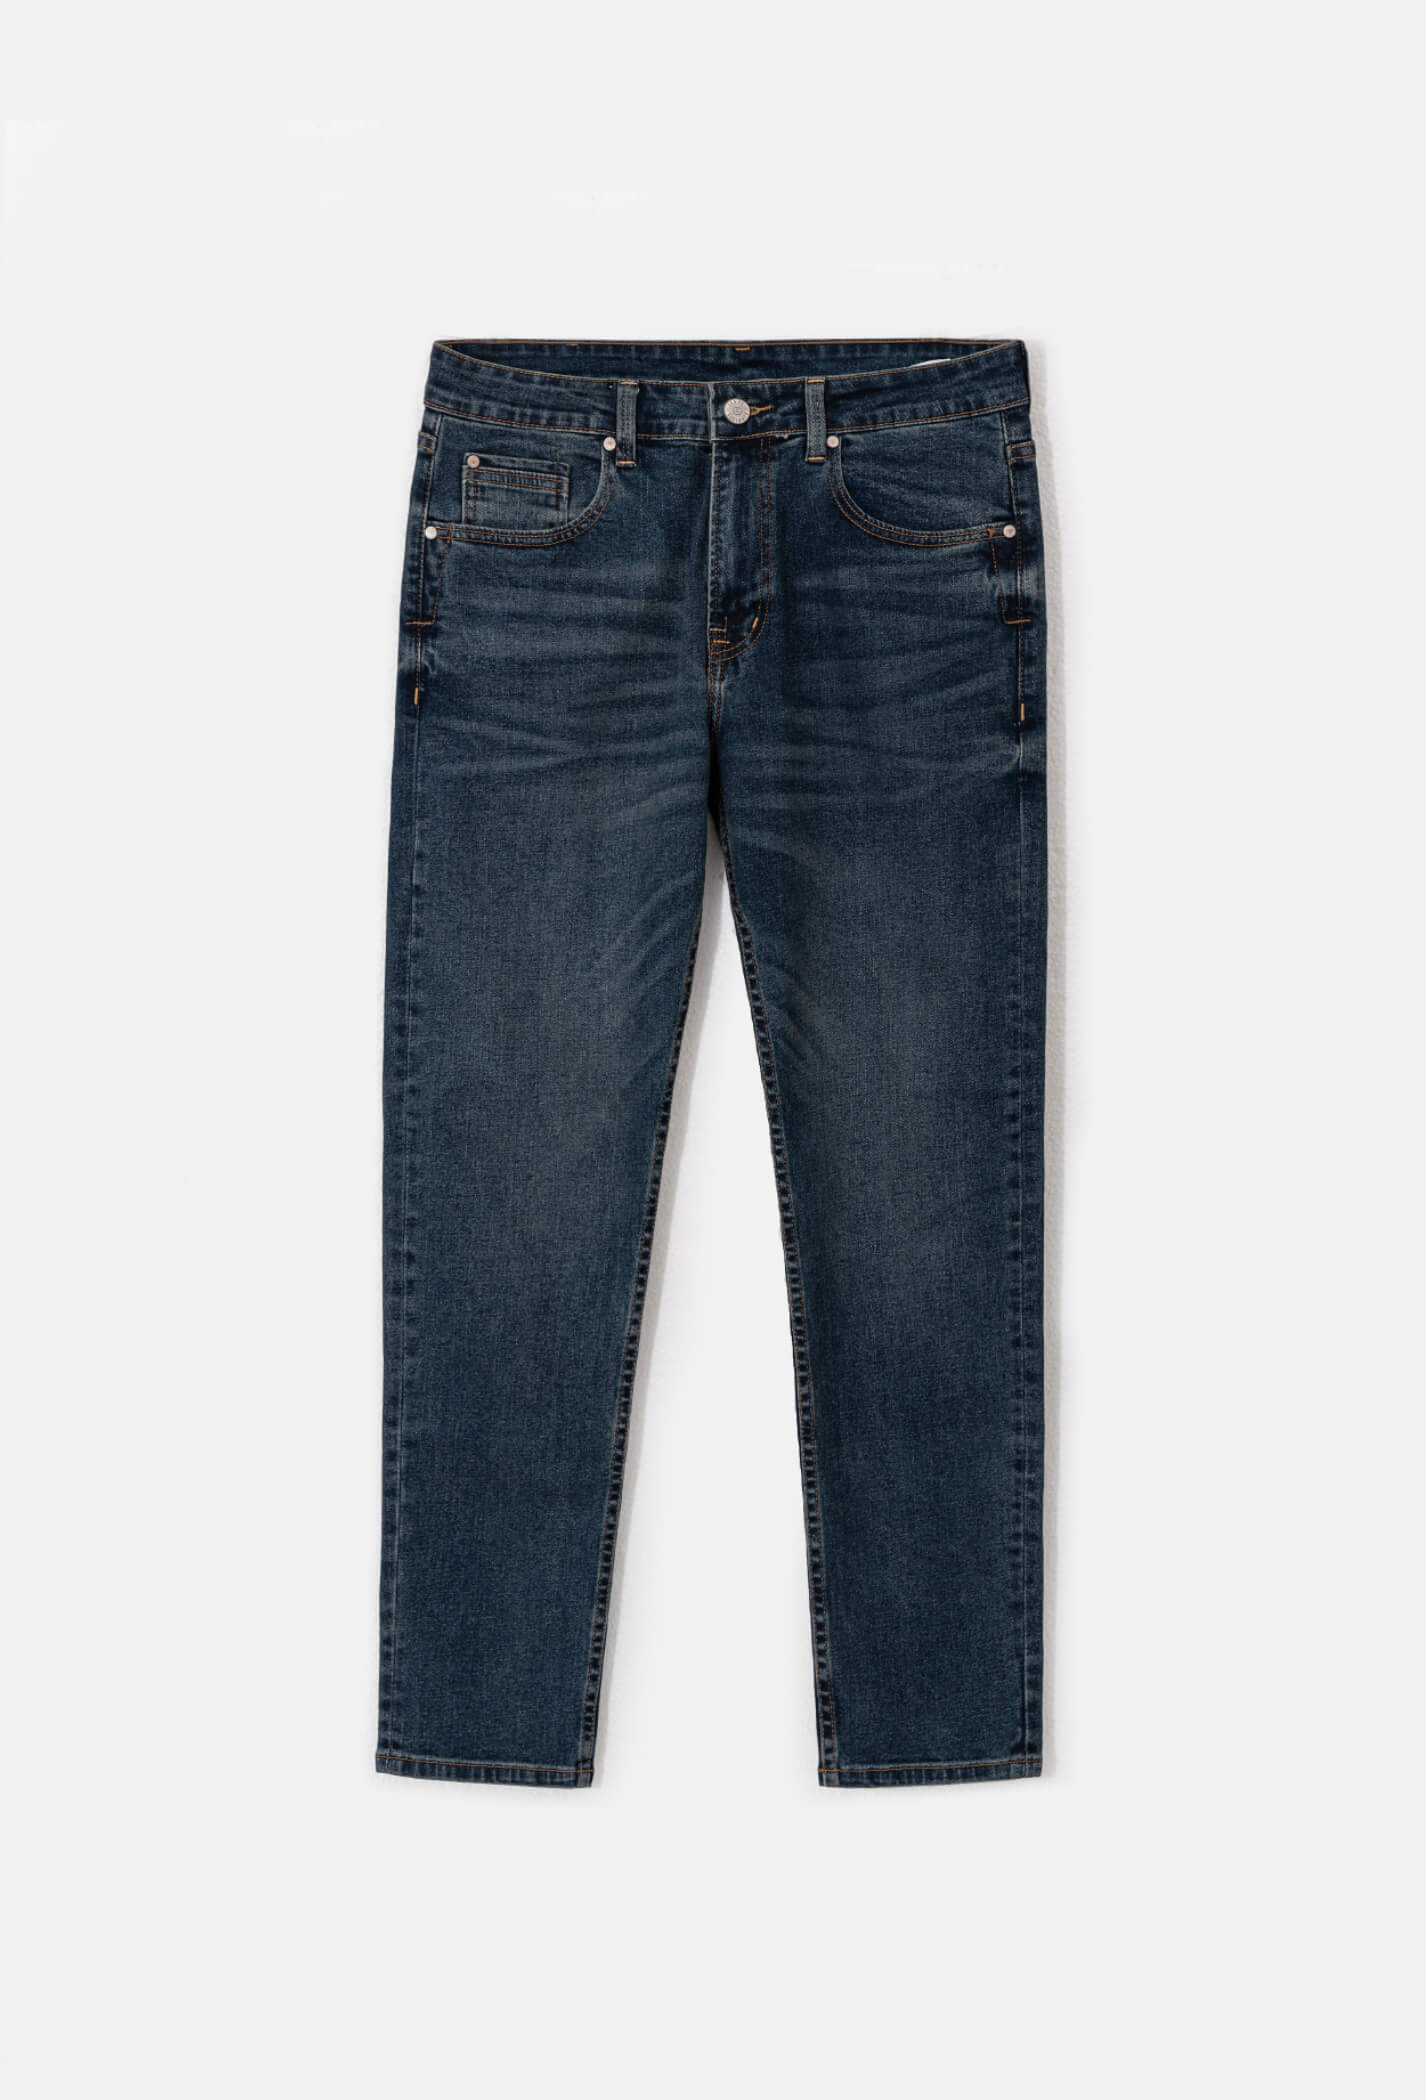 Quần Jeans Basic Slim V2 Xanh �����m 2